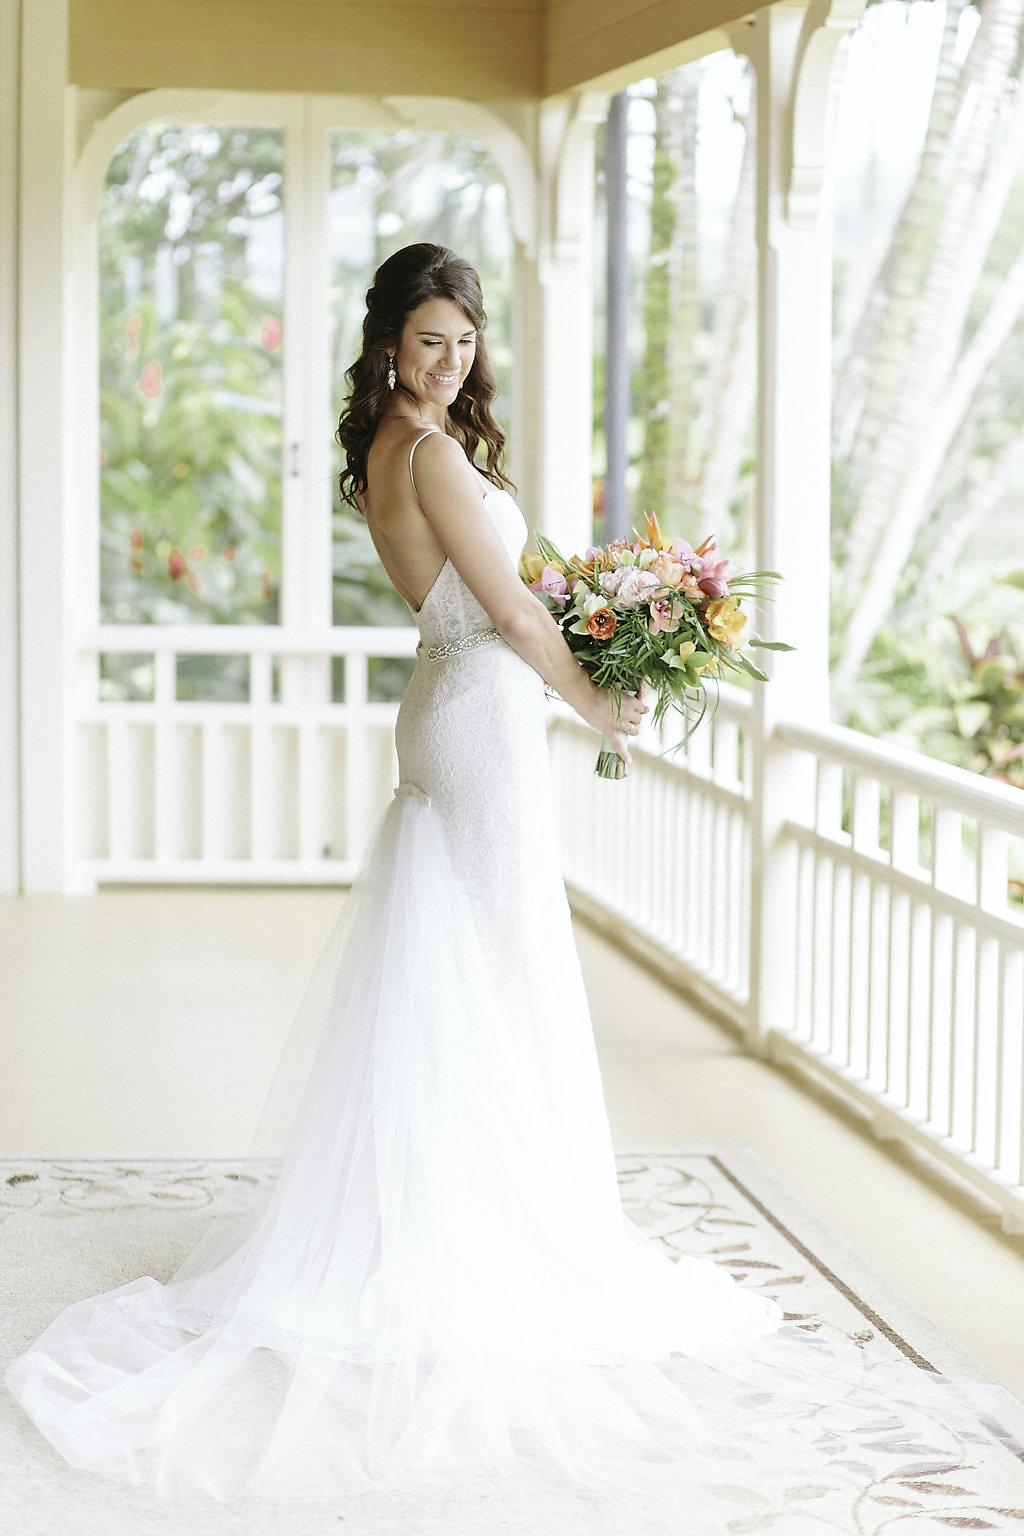 Mikaela wedding gown